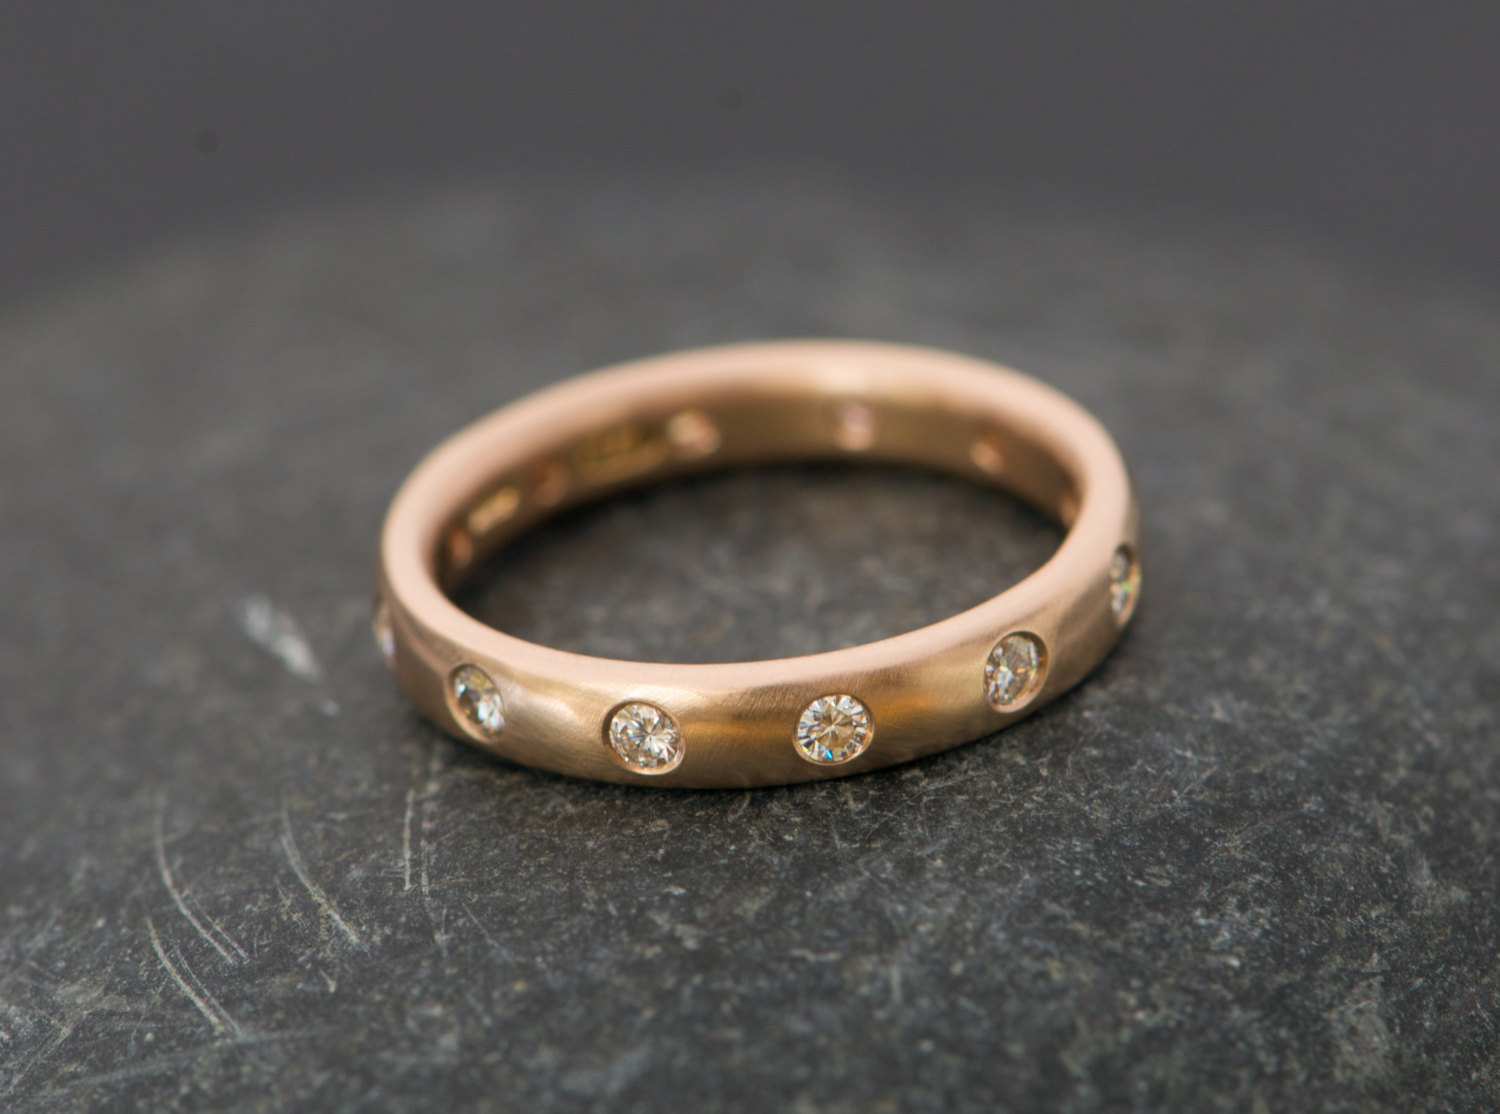 18k rose gold eternity ring set with moissanite stones